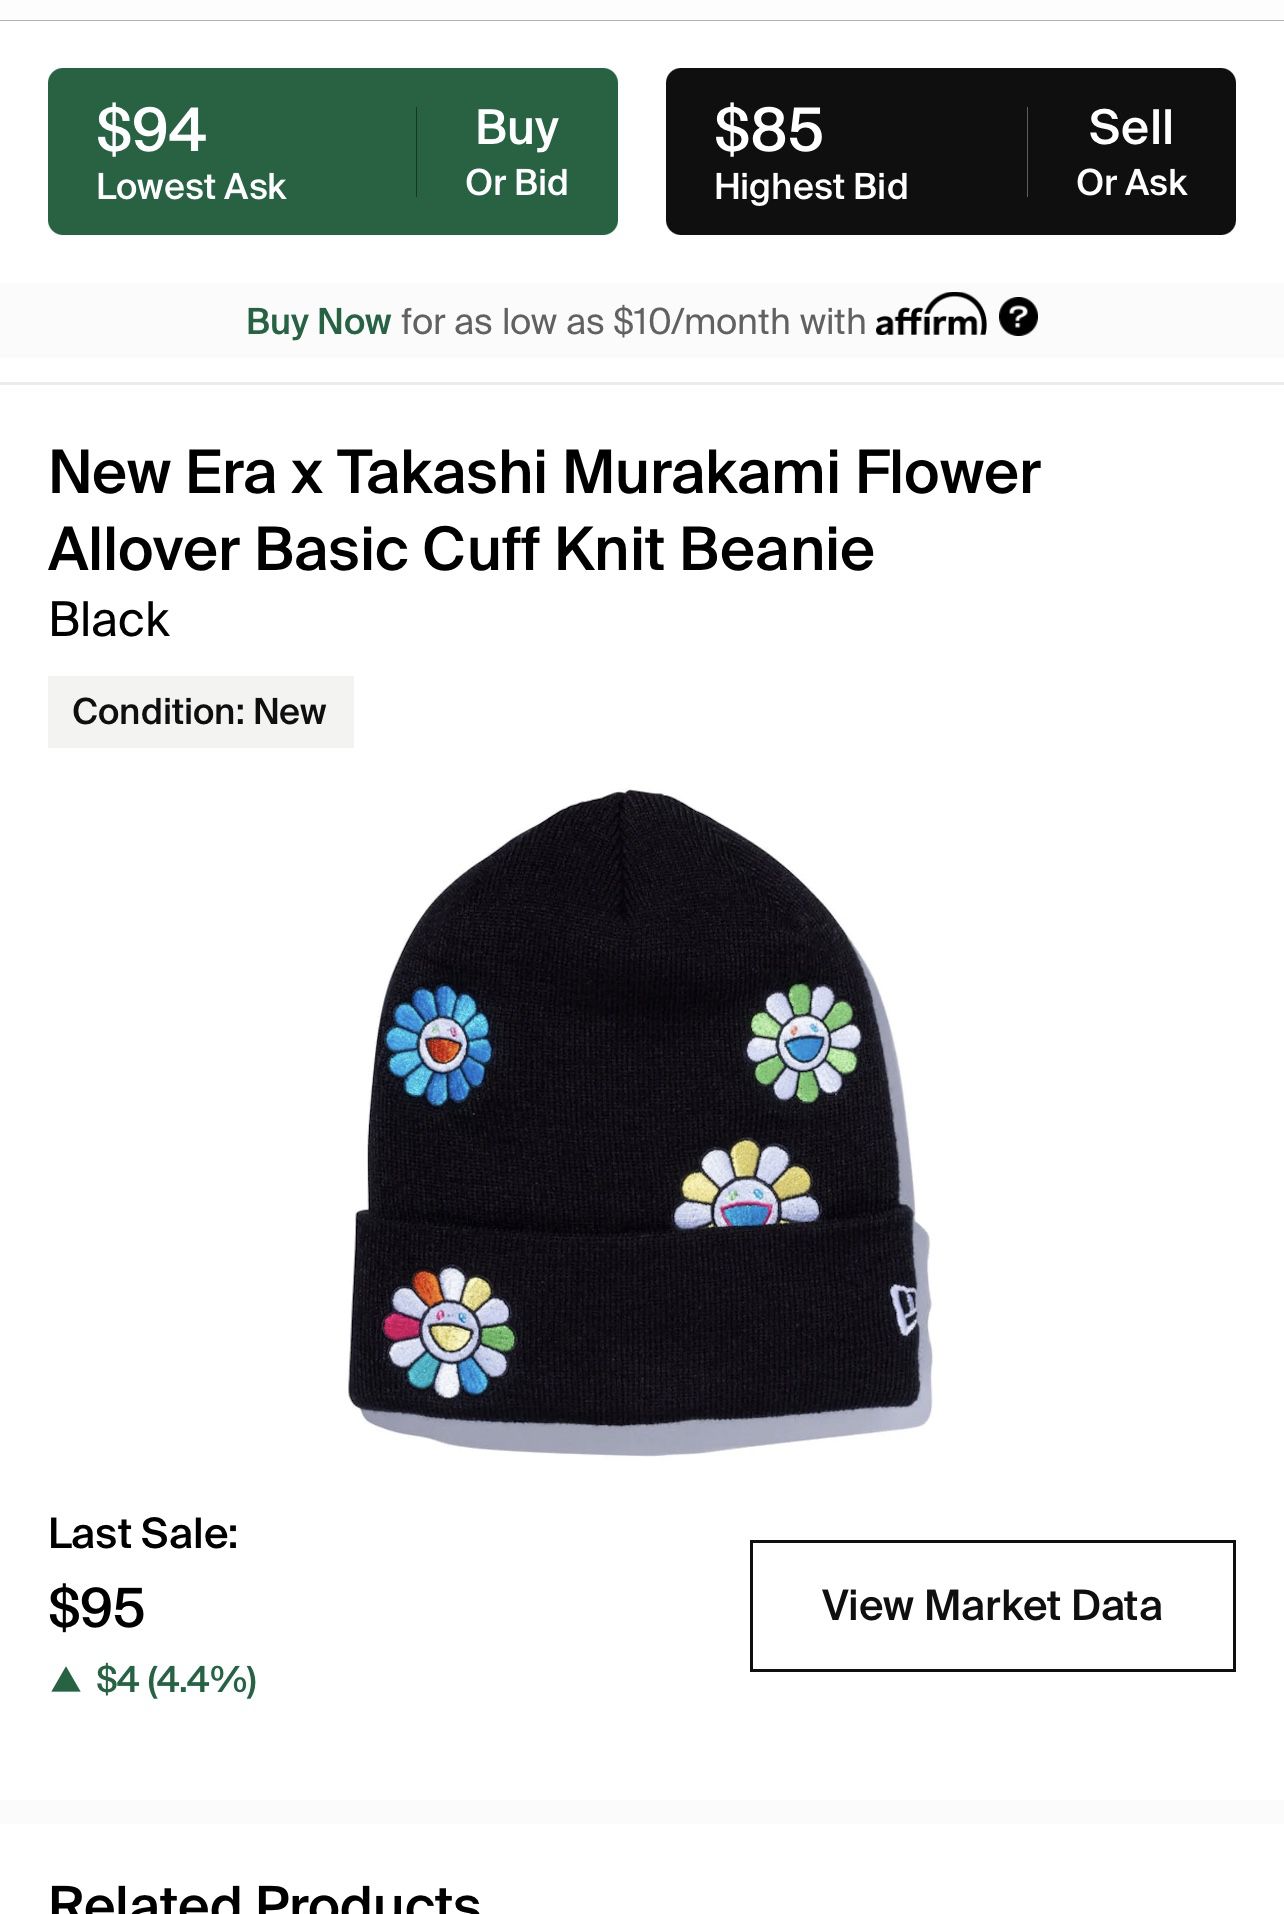 New Era x Takashi Murakami Flower Basic Cuff Knit Beanie Black